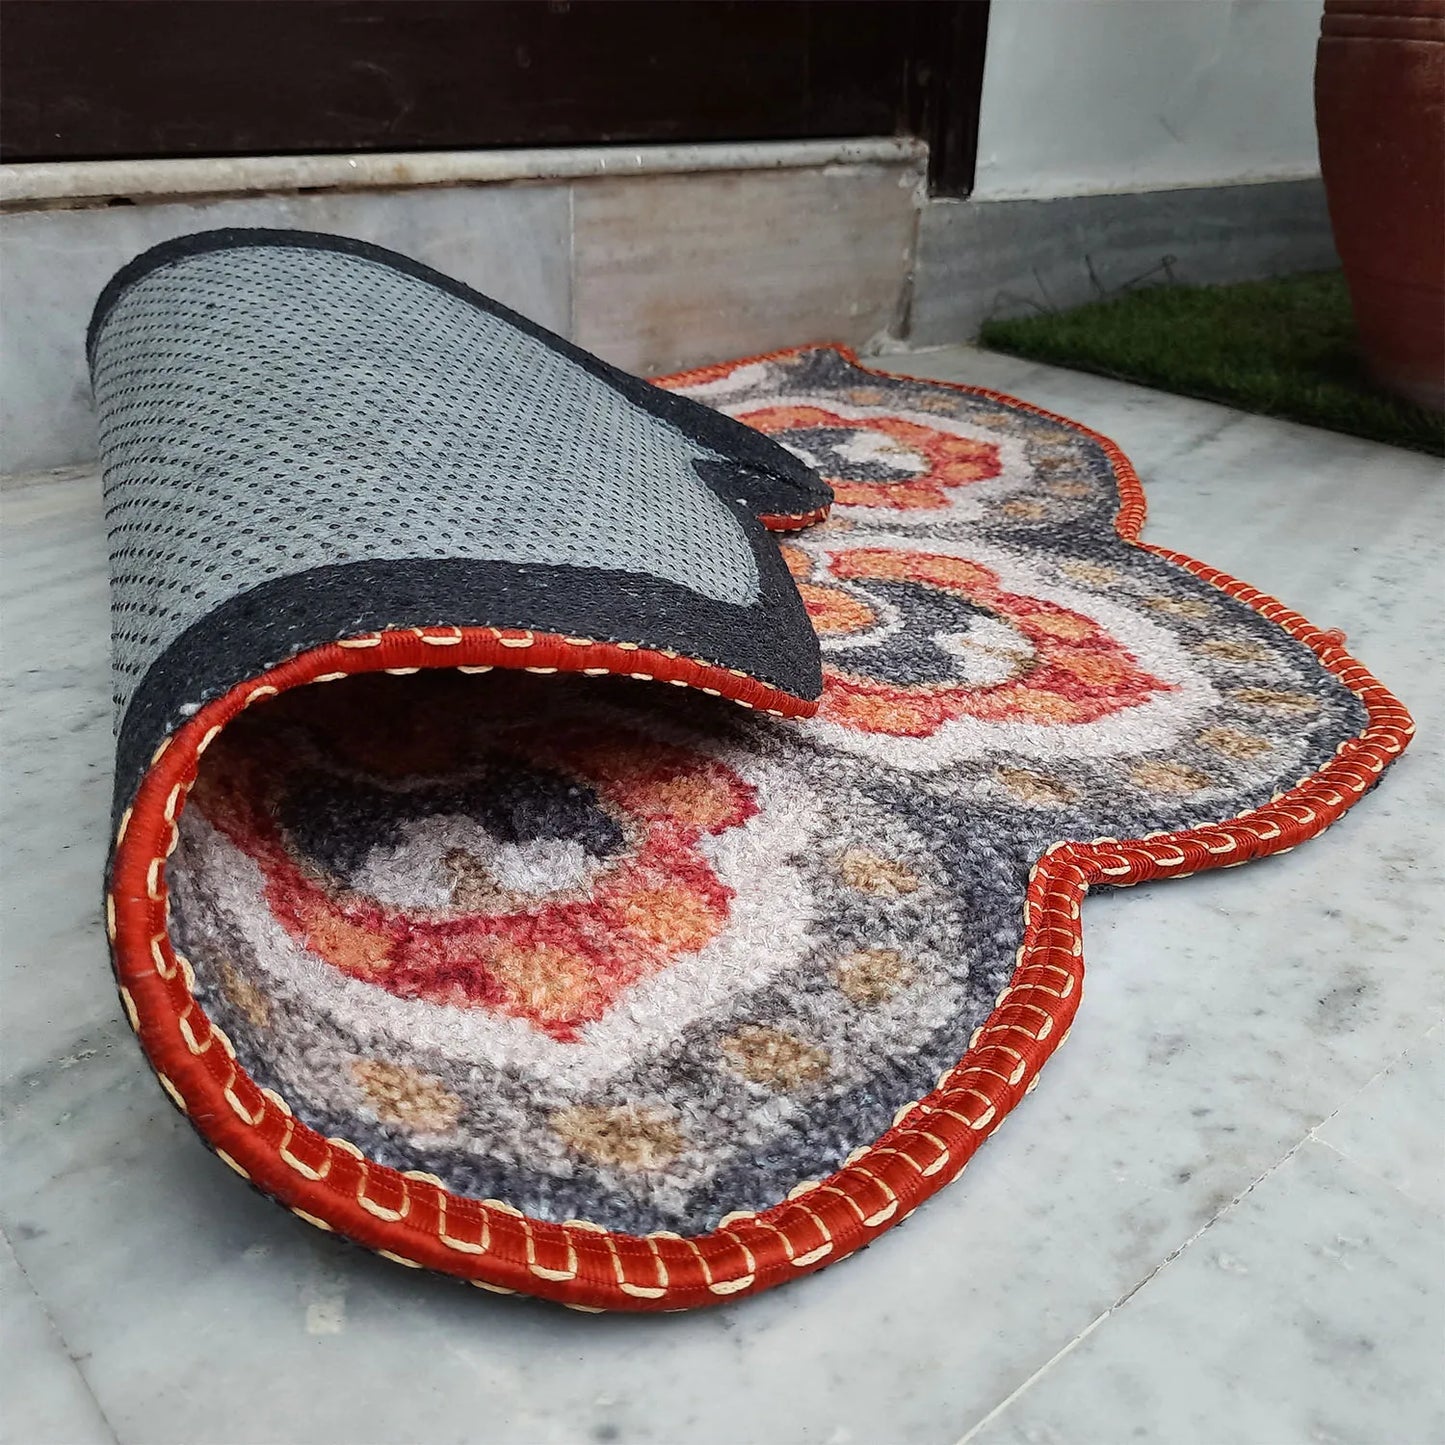 Avioni Home Floor Mats in Beautiful Rangoli Modern Petals Design – Anti Slip, Durable & Washable | Outdoor & Indoor